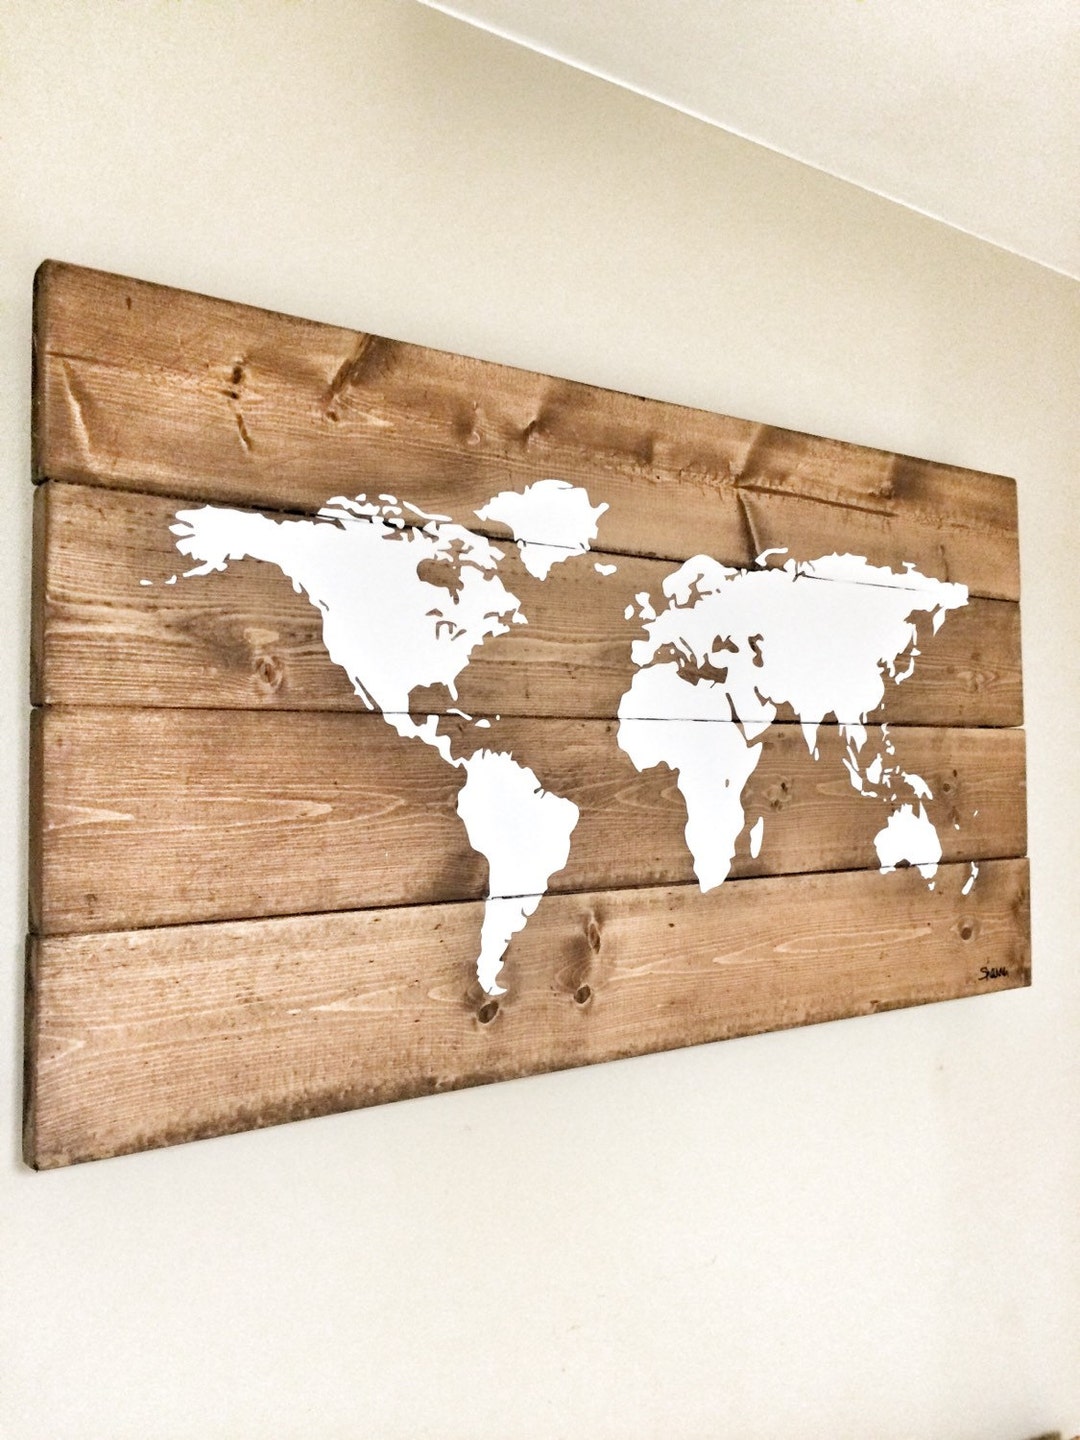 Travel Decor, Wooden World Map, Wall Art, Christmas Gift, Home Decor